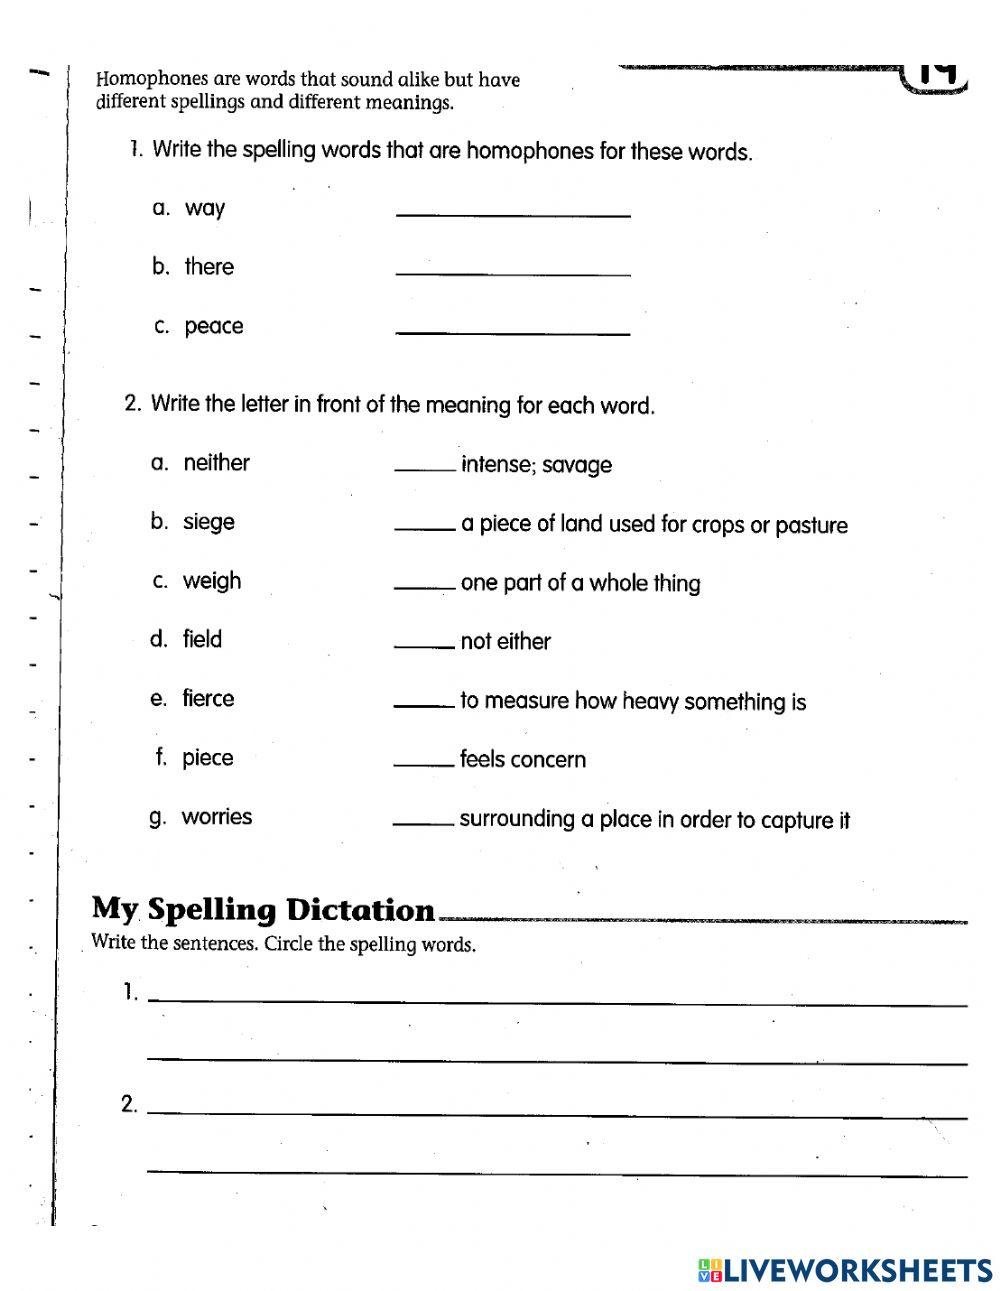 Miss. M spelling lesson 19 pg 2